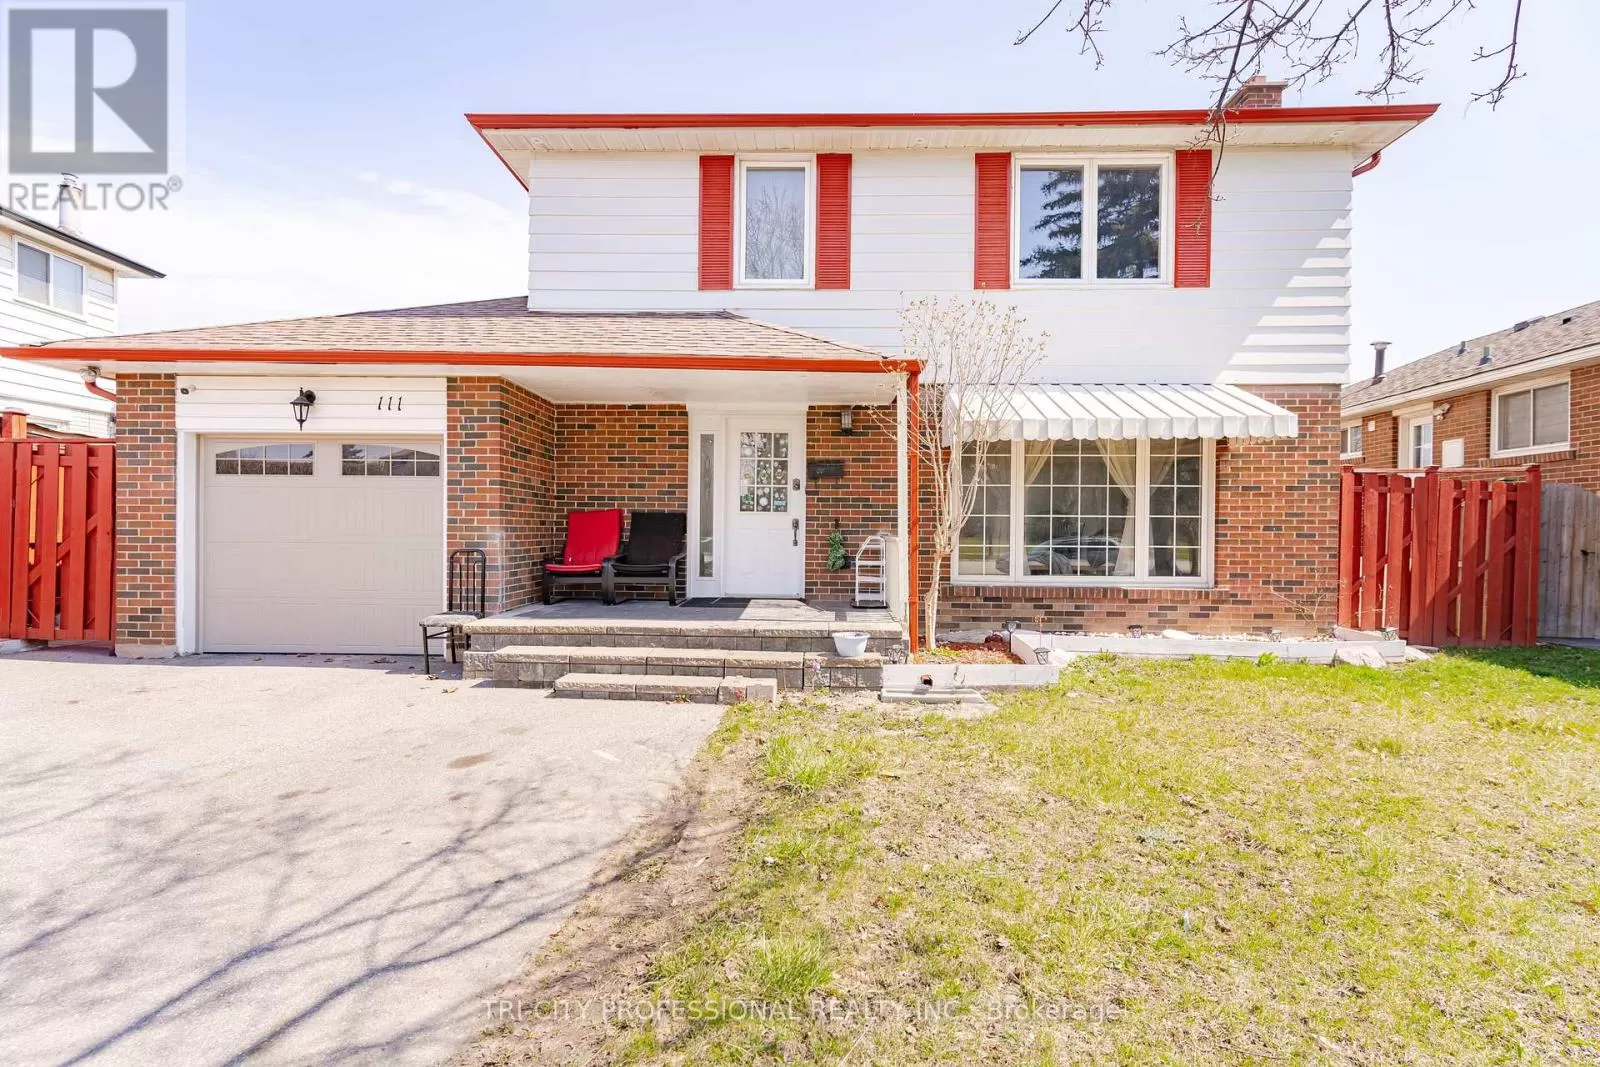 House for rent: 111 Dearbourne Blvd, Brampton, Ontario L6T 1J8